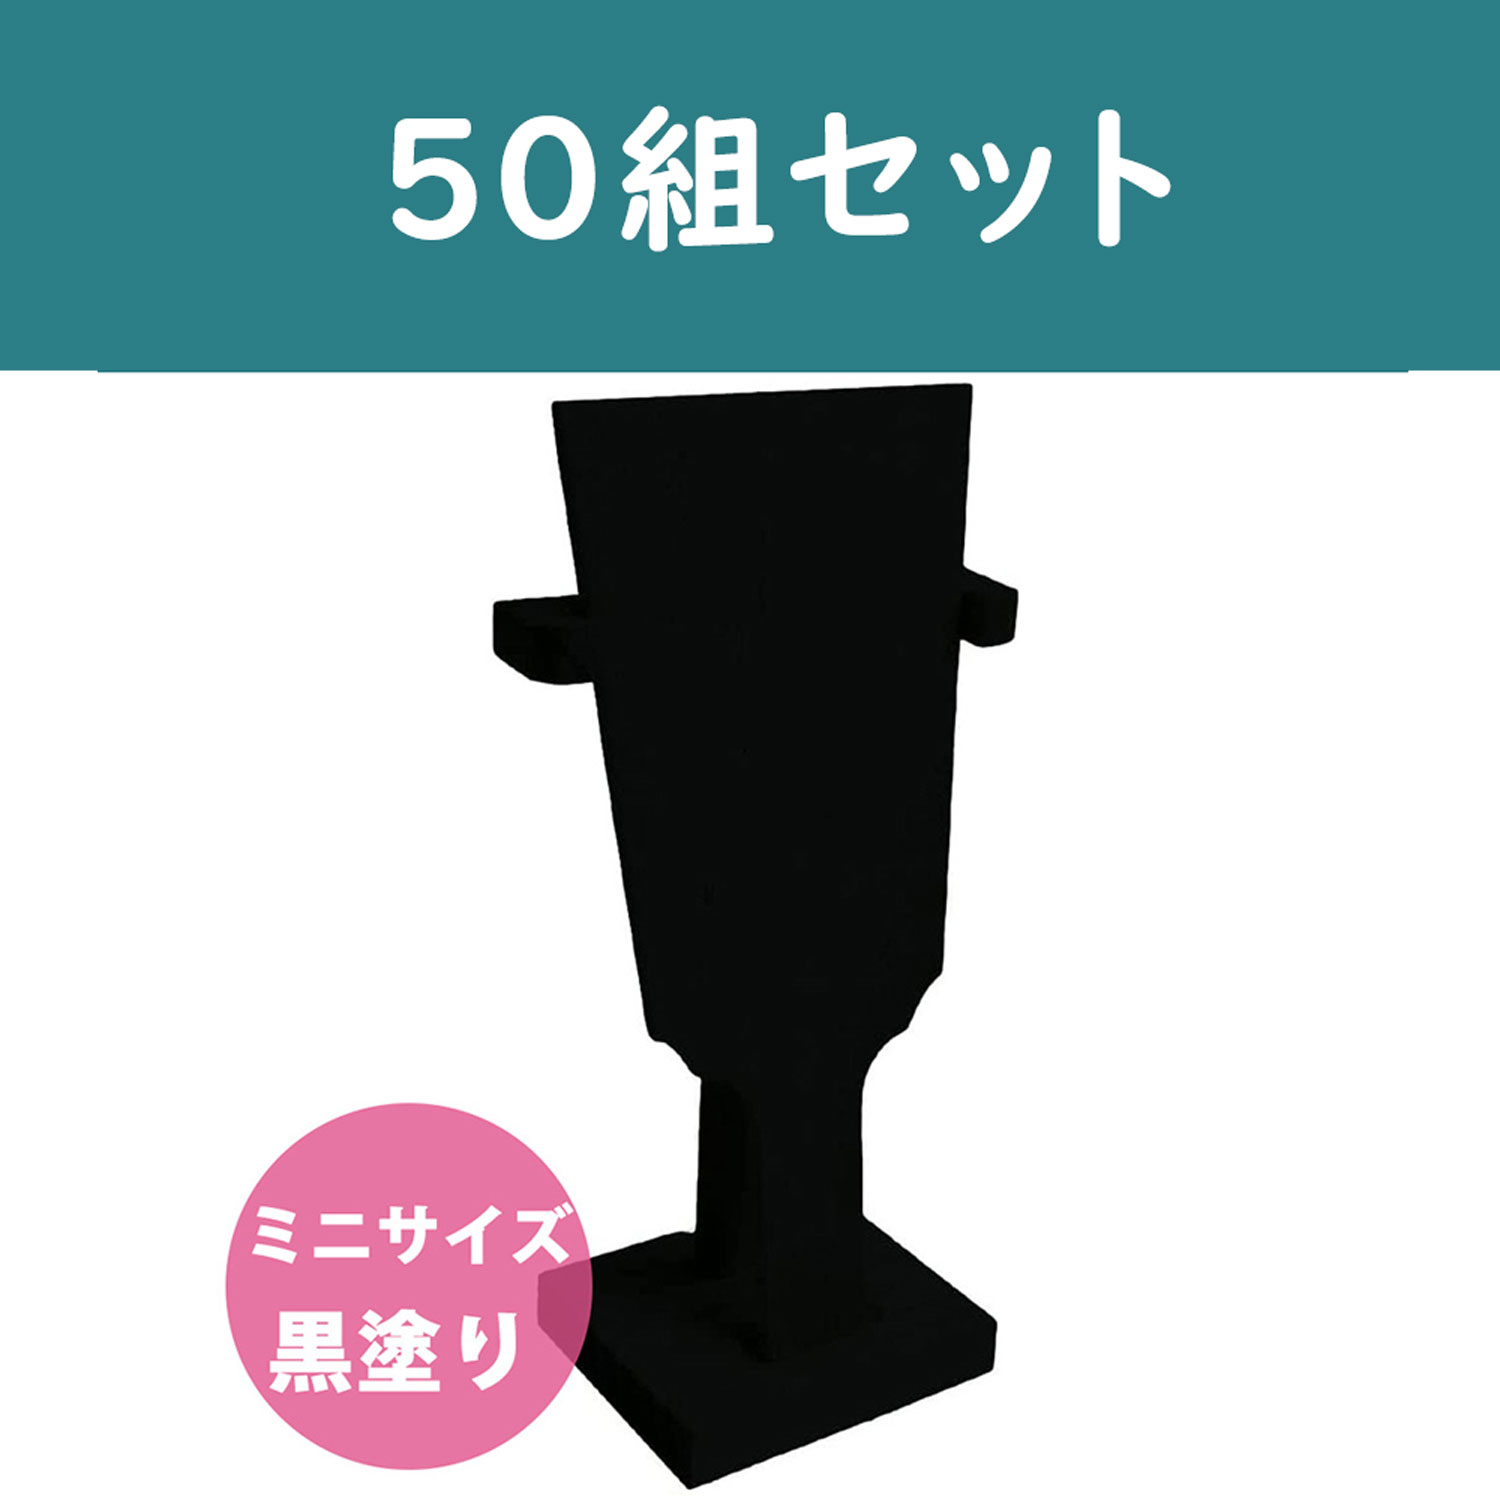 CC1291-50 Mini Hagoita (Decorative Base) with Stand Black 50sets (set)